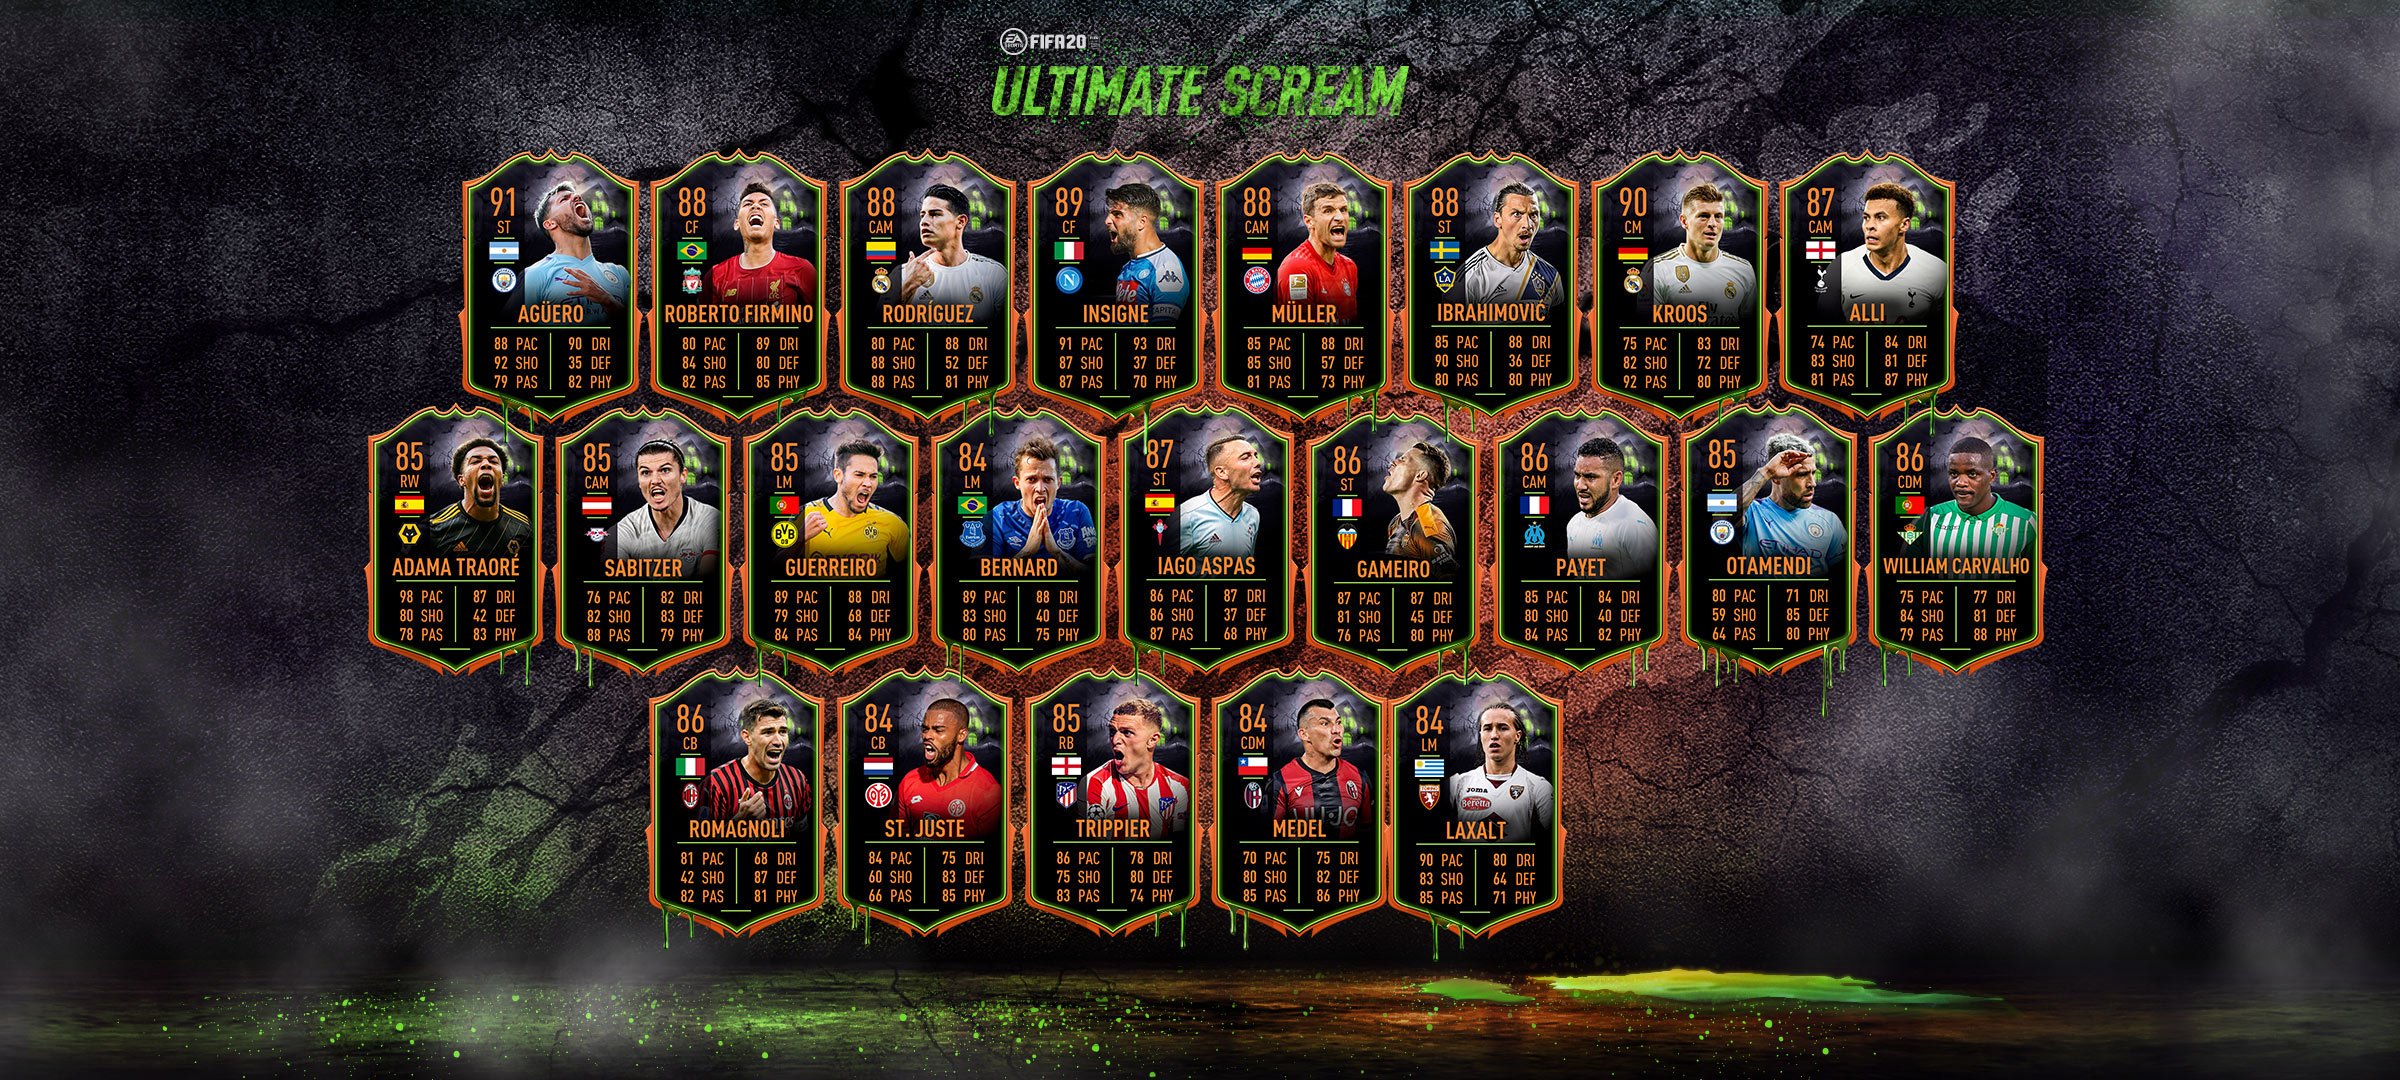 FIFA 20 Ultimate Scream players